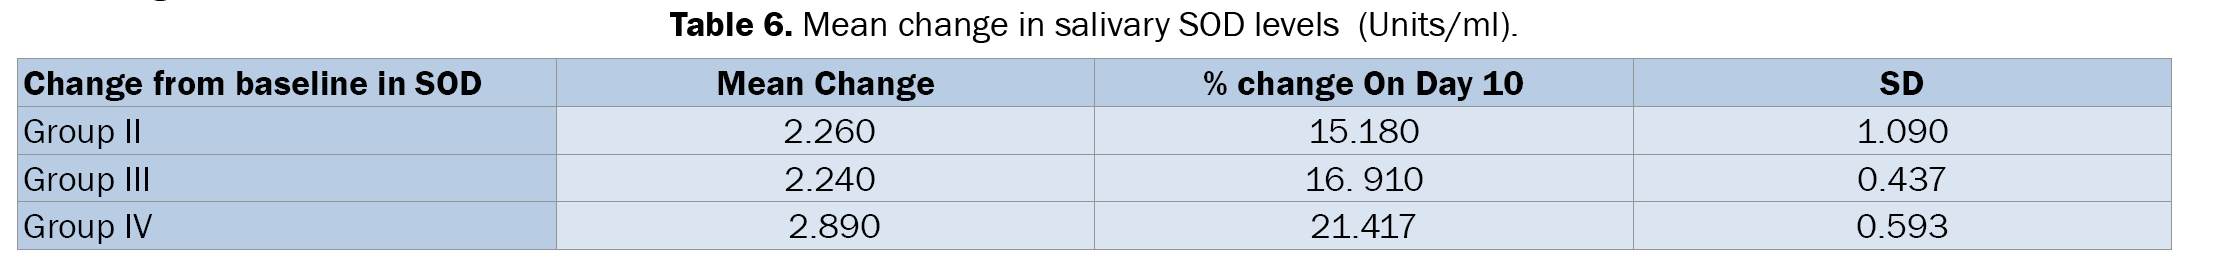 Dental-Sciences-Mean-change-salivary-SOD-levels